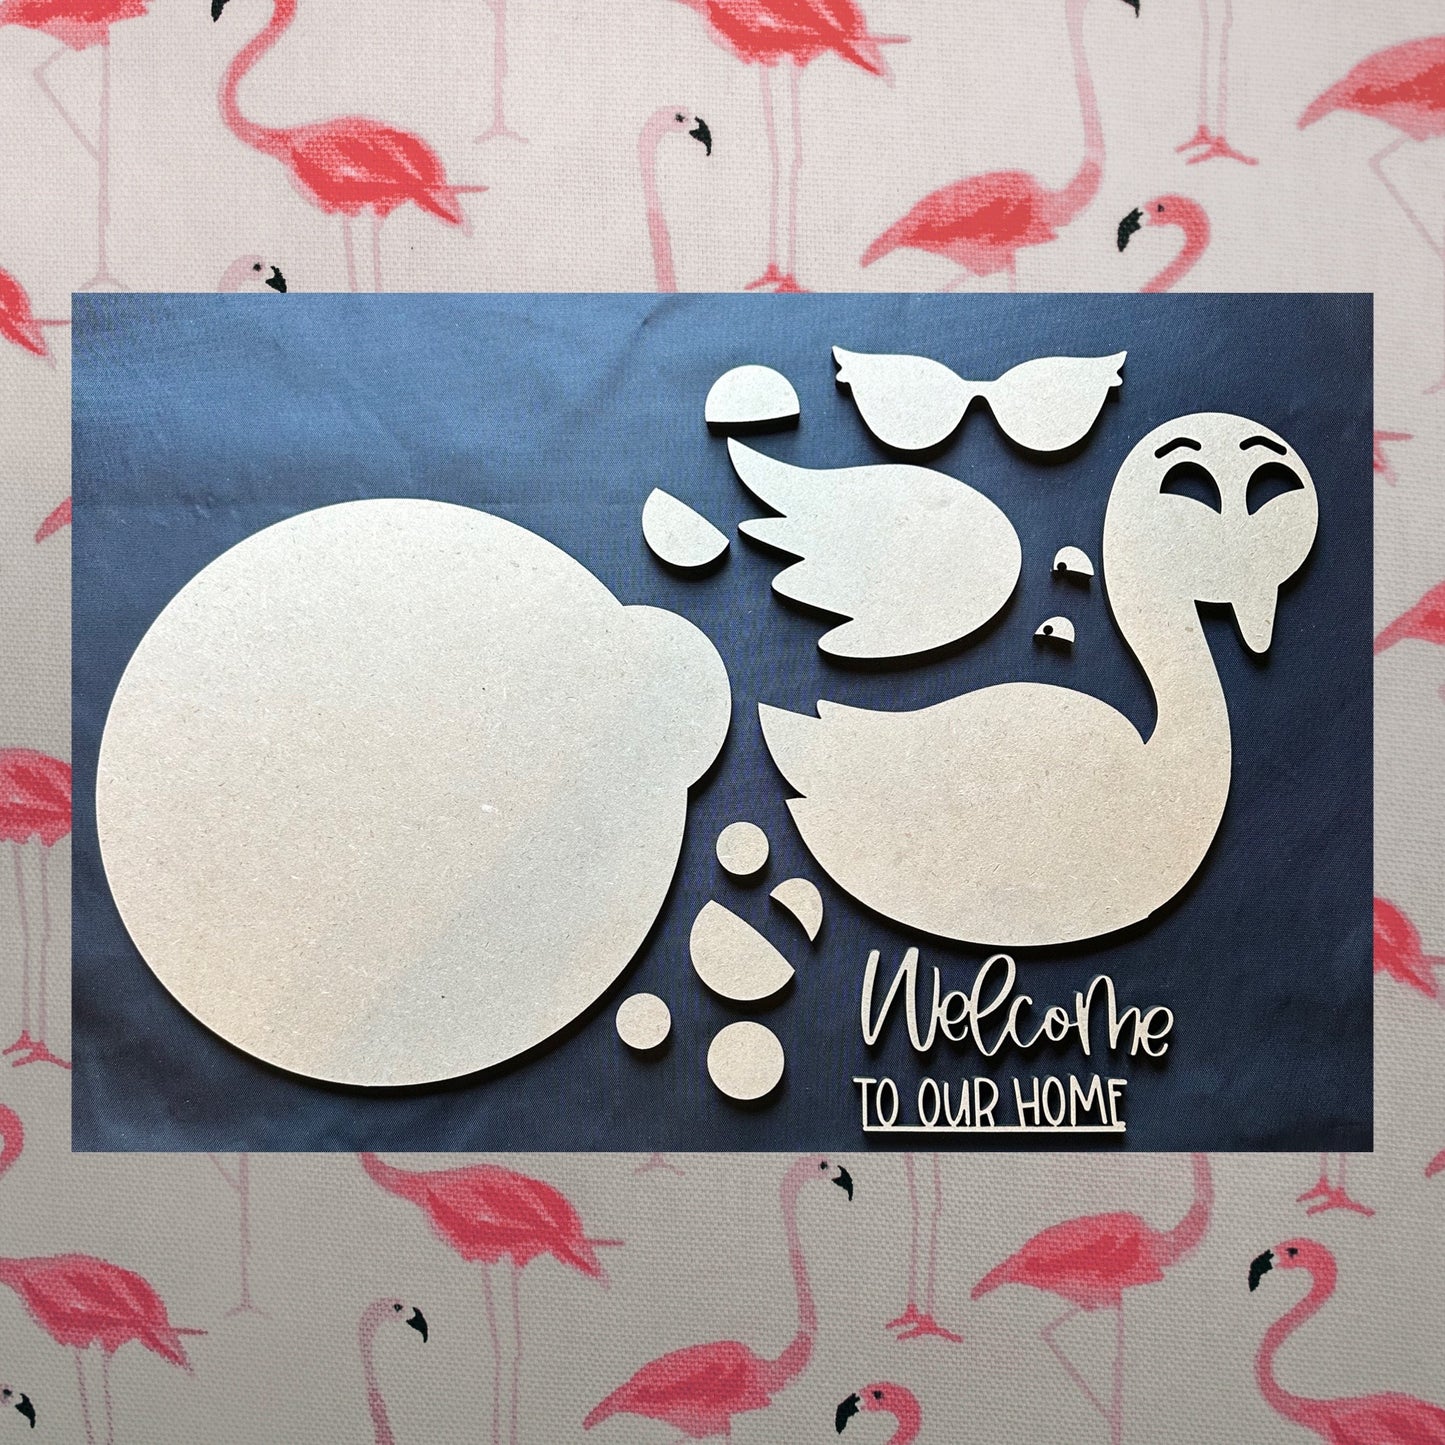 Flamingo Welcome DIY Laser Cut Wood Sign Craft Paint Kit